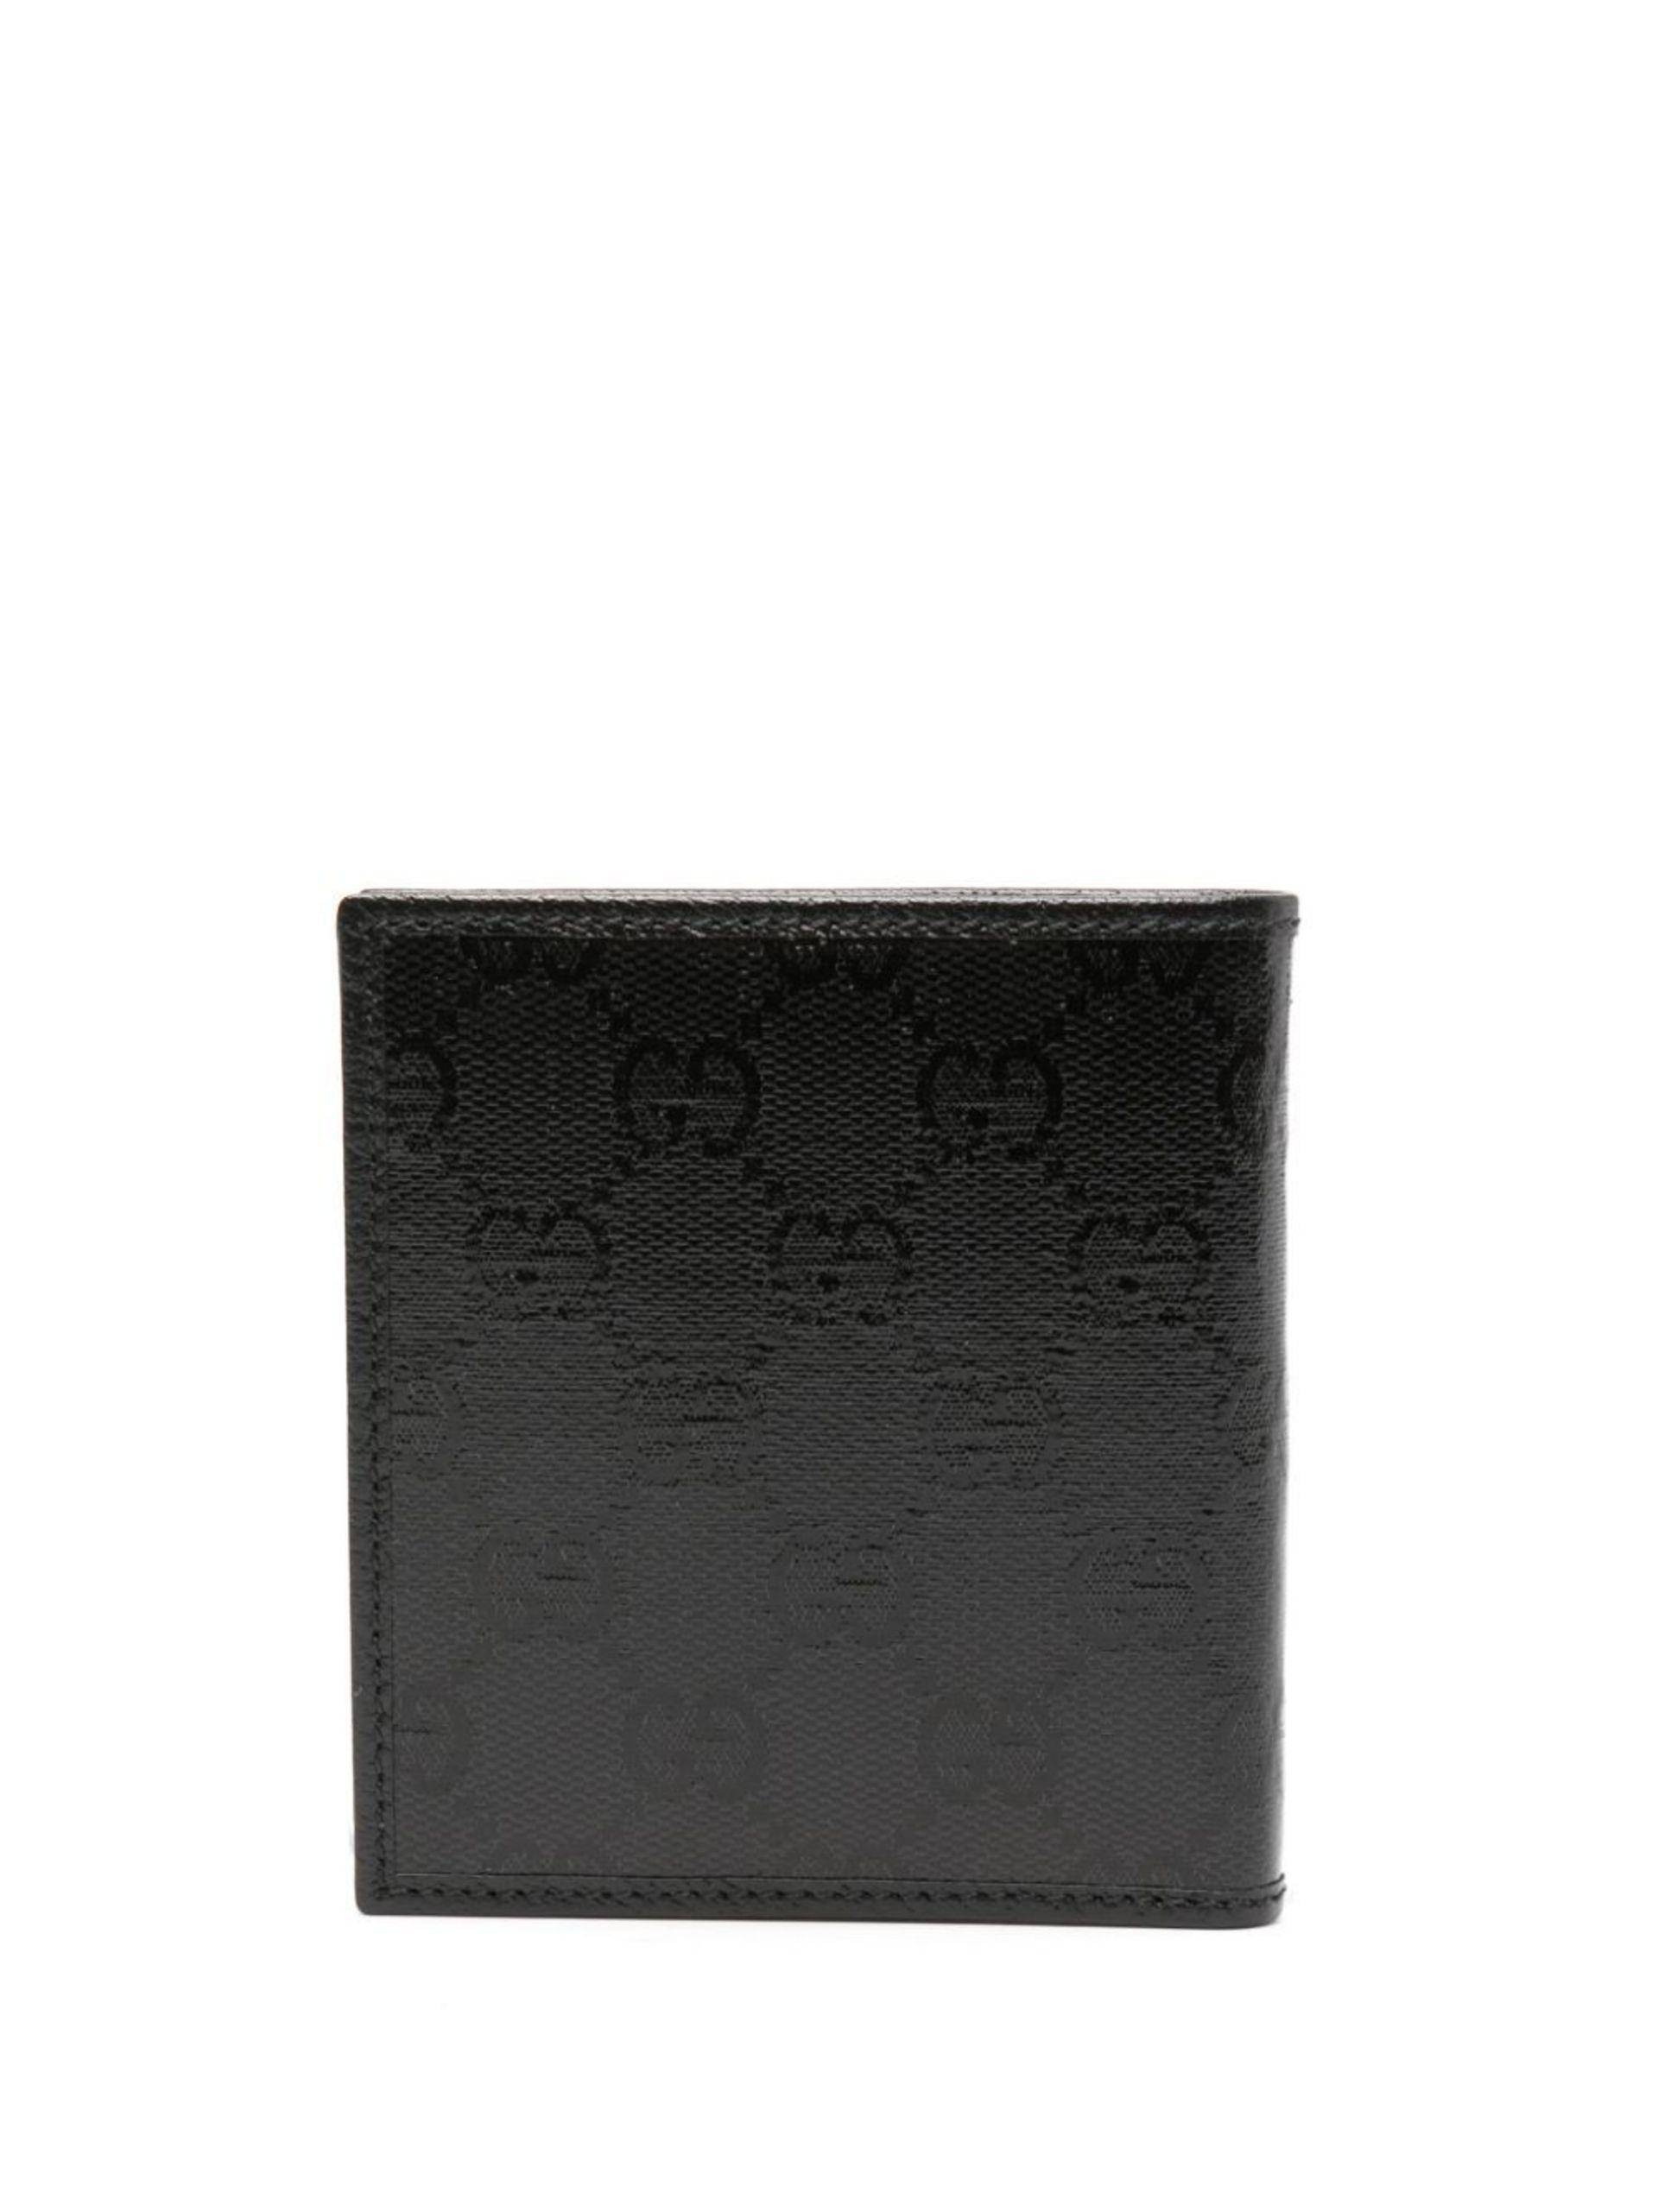 Gucci Bifold Wallet GG Nylon Black in Nylon/Leather - US